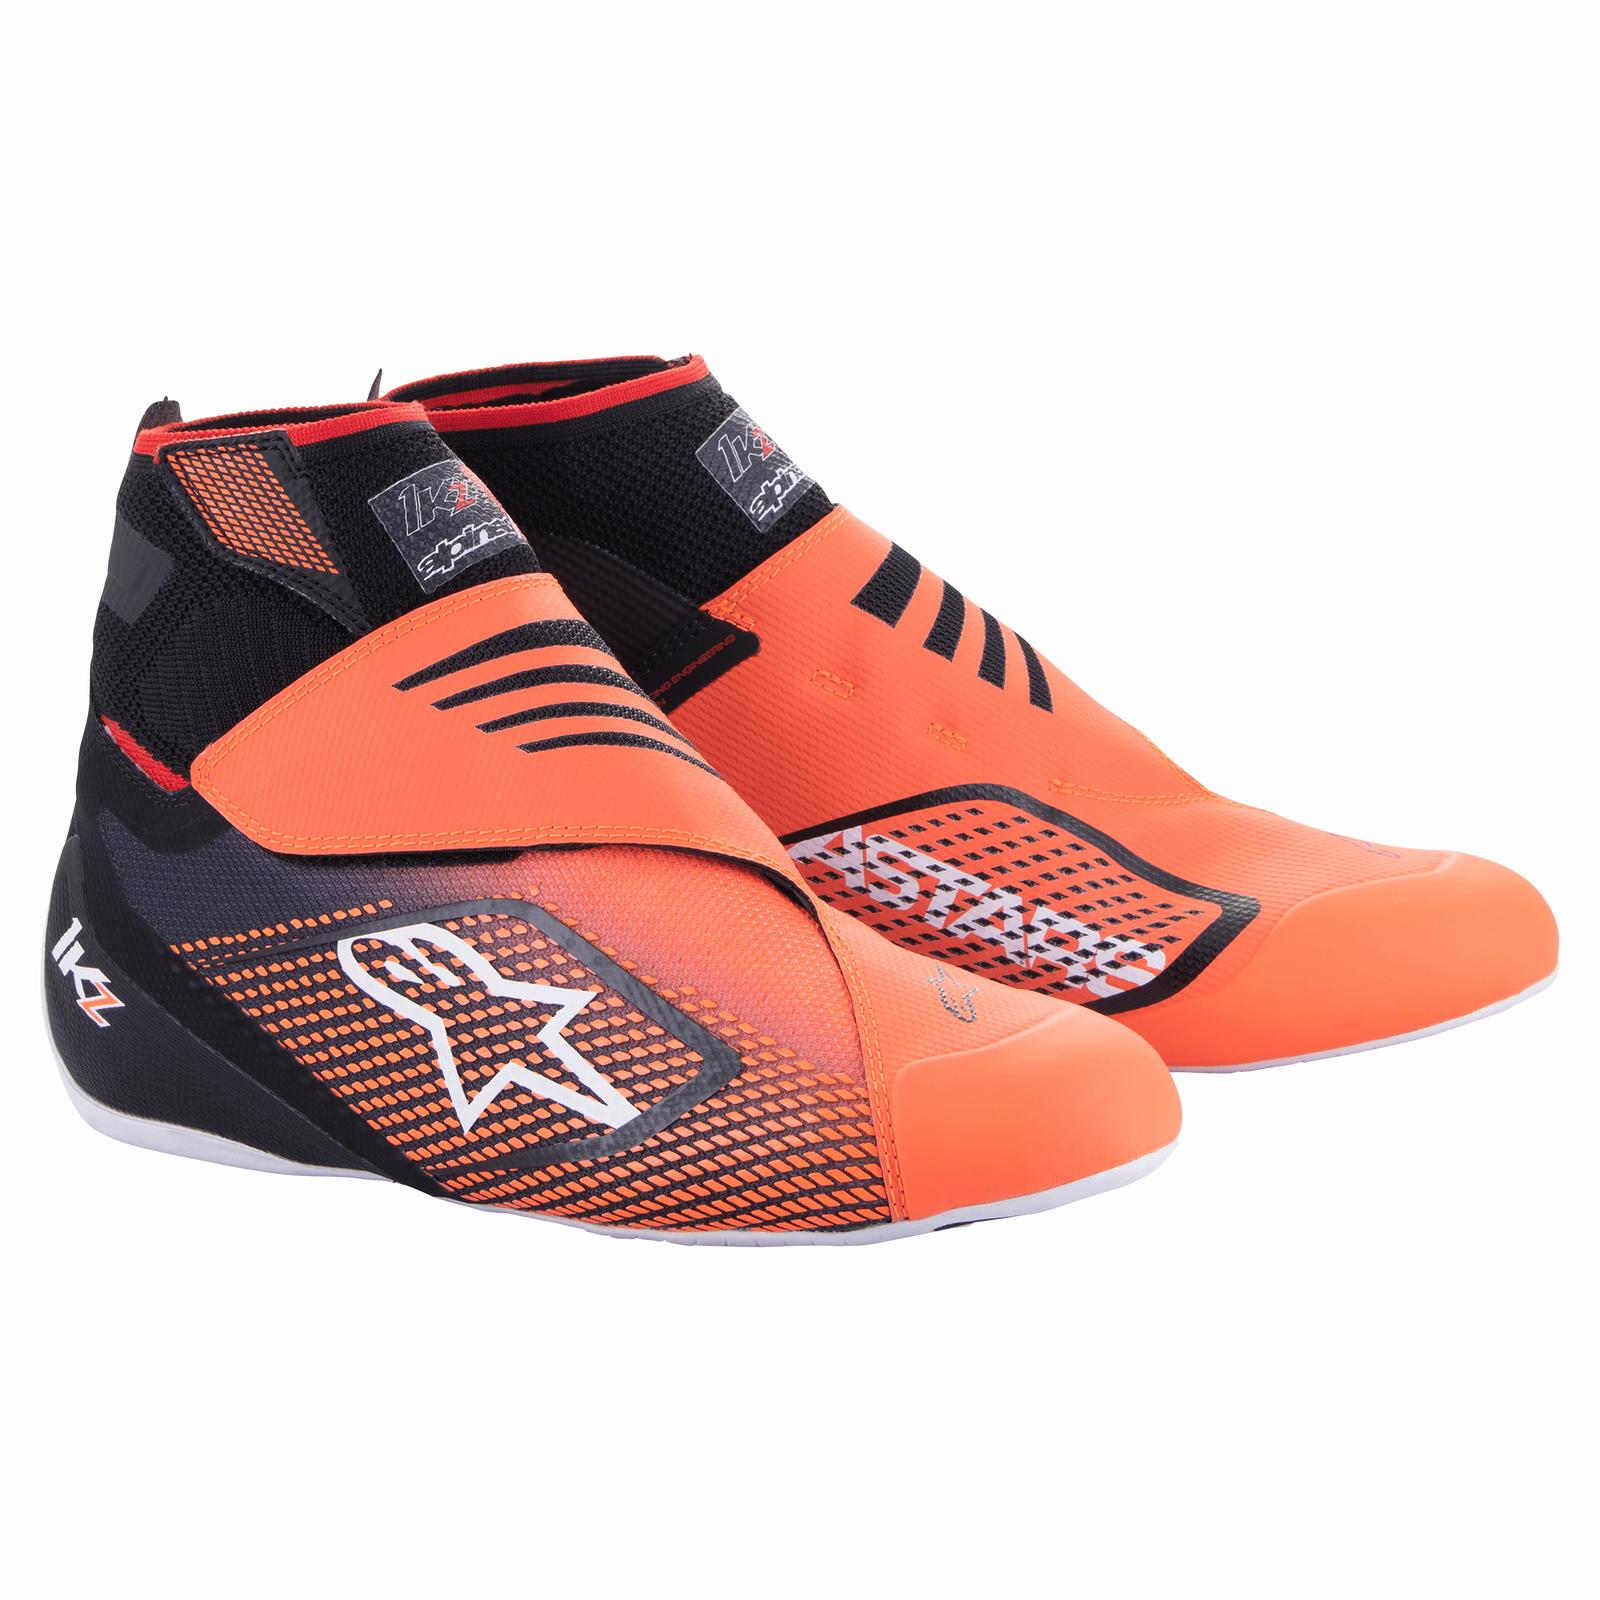 Tech-1 KZ V2 Shoes Alpinestars | Alpinestars® Official Site